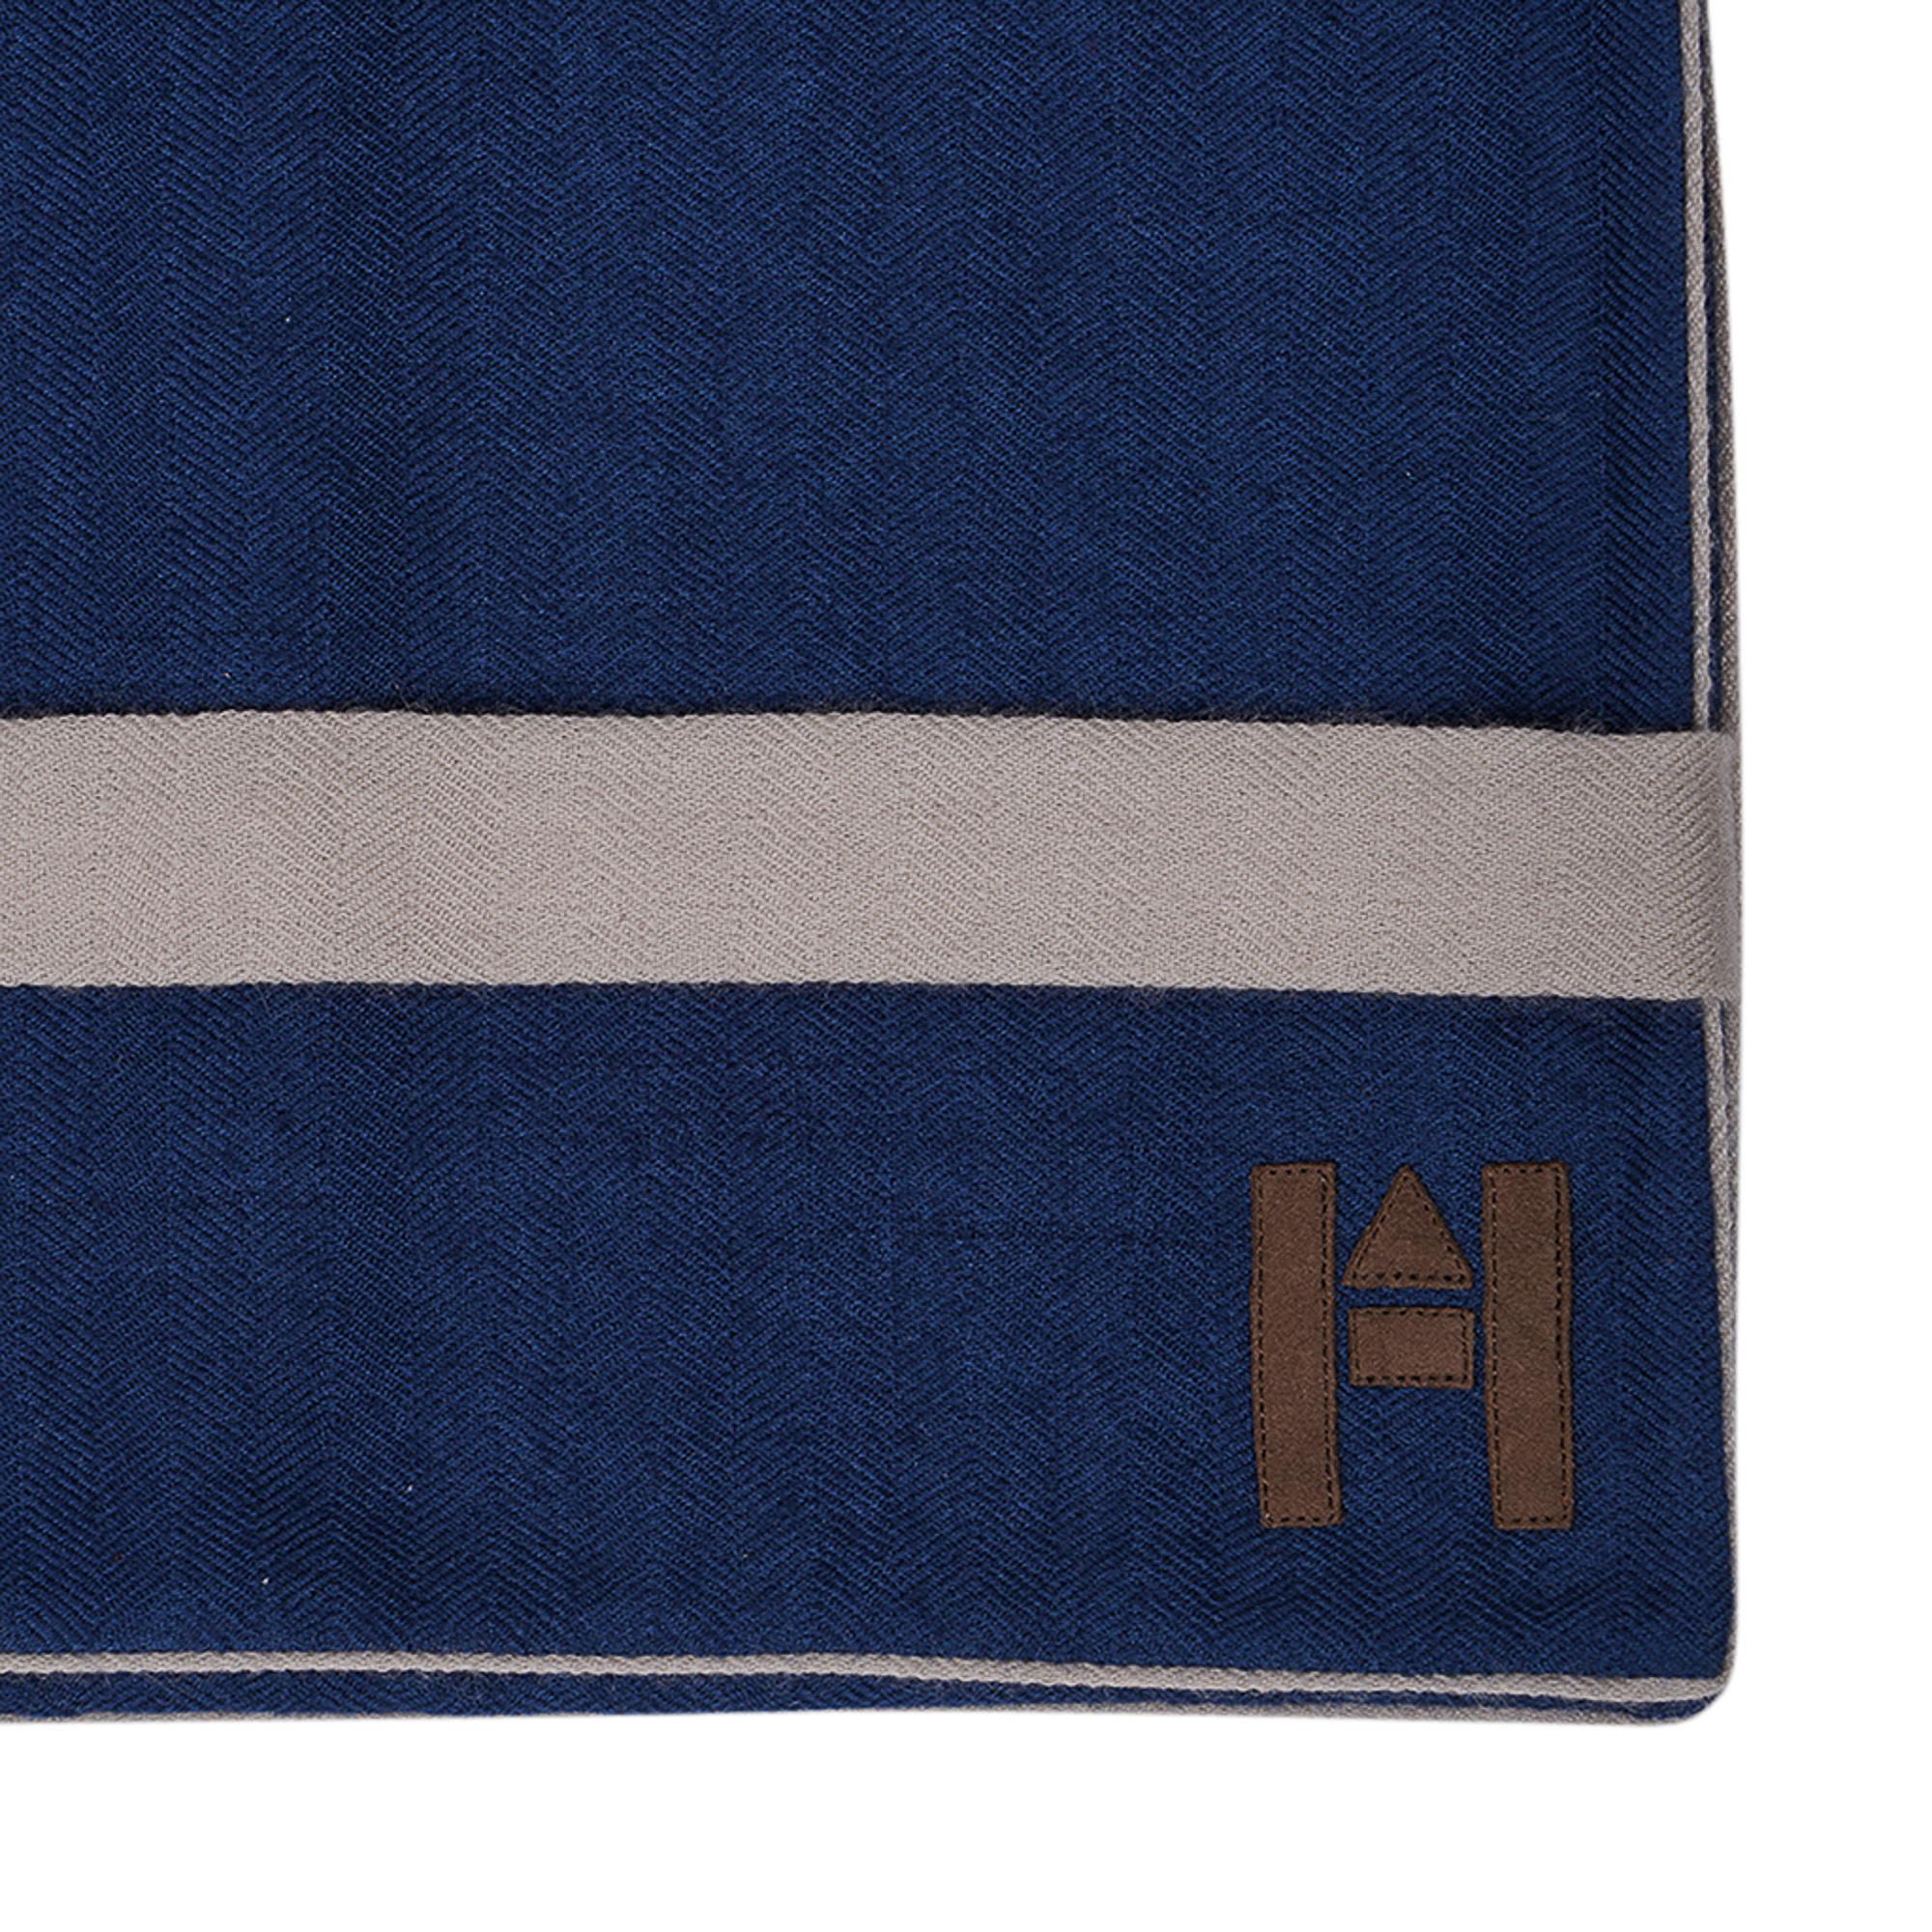 Hermes Traveler with Case Blanket Blue / Cream Cashmere For Sale 1